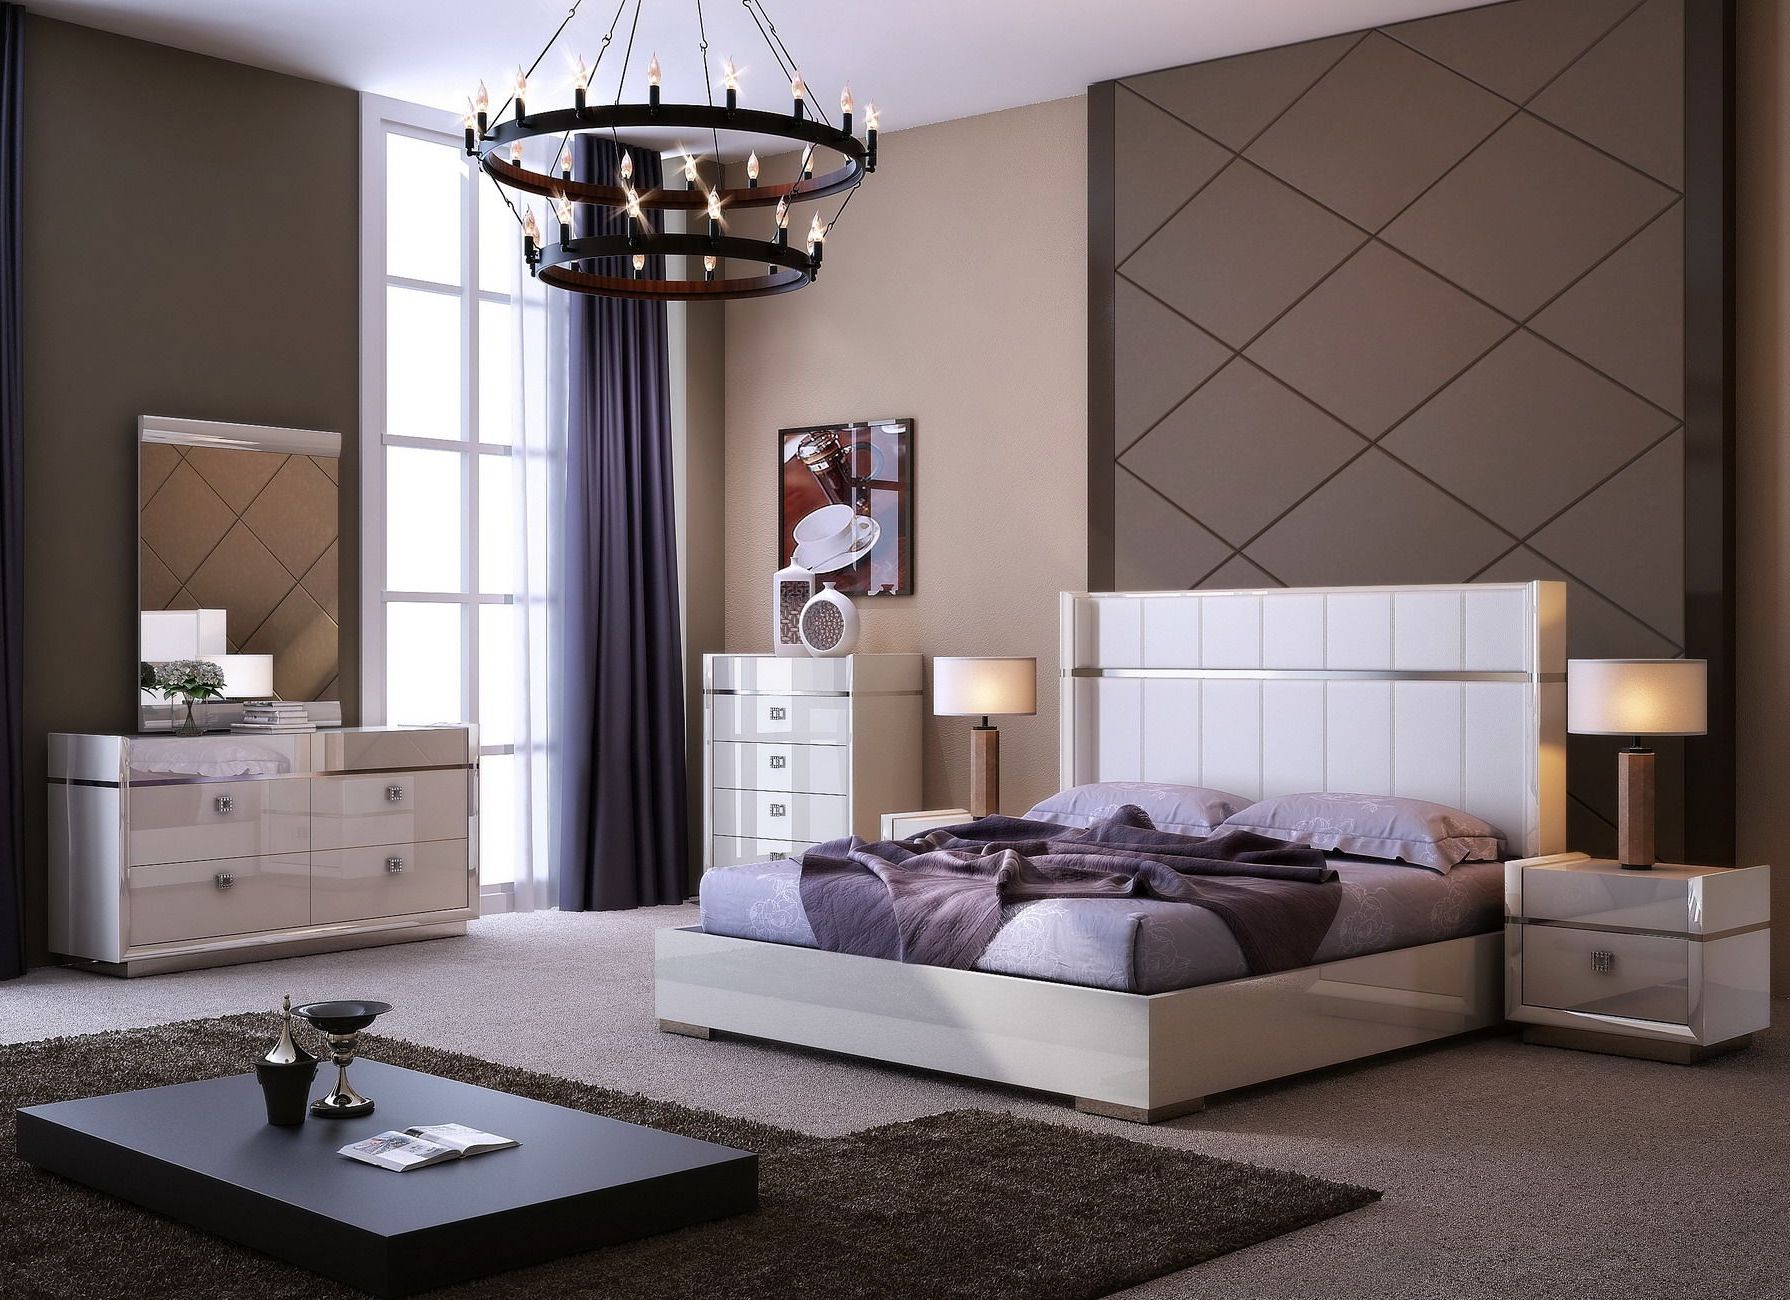 chrome bedroom furniture handles